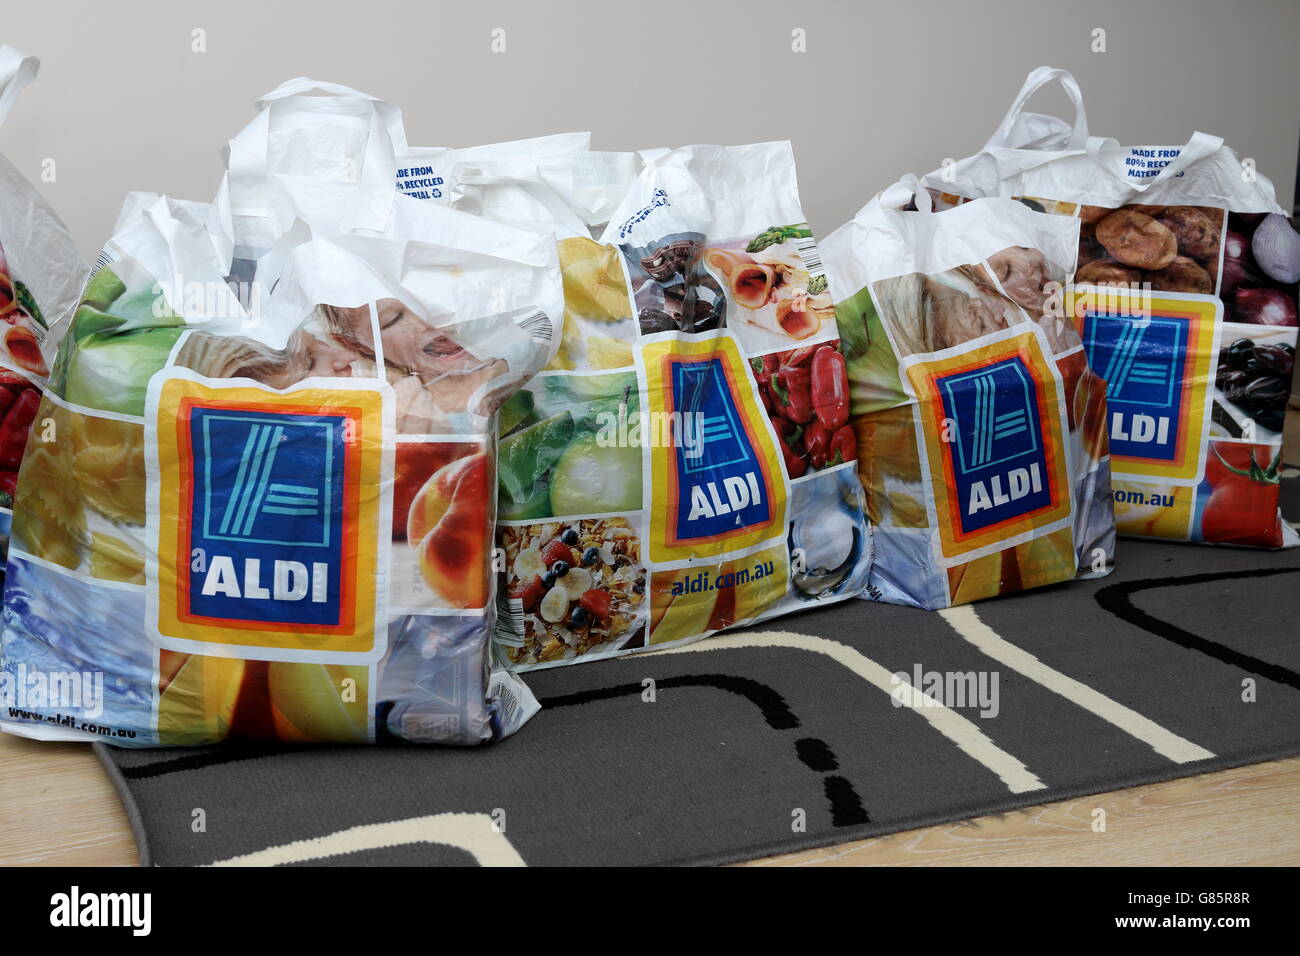 etnisk smid væk Energize Aldi bags hi-res stock photography and images - Alamy